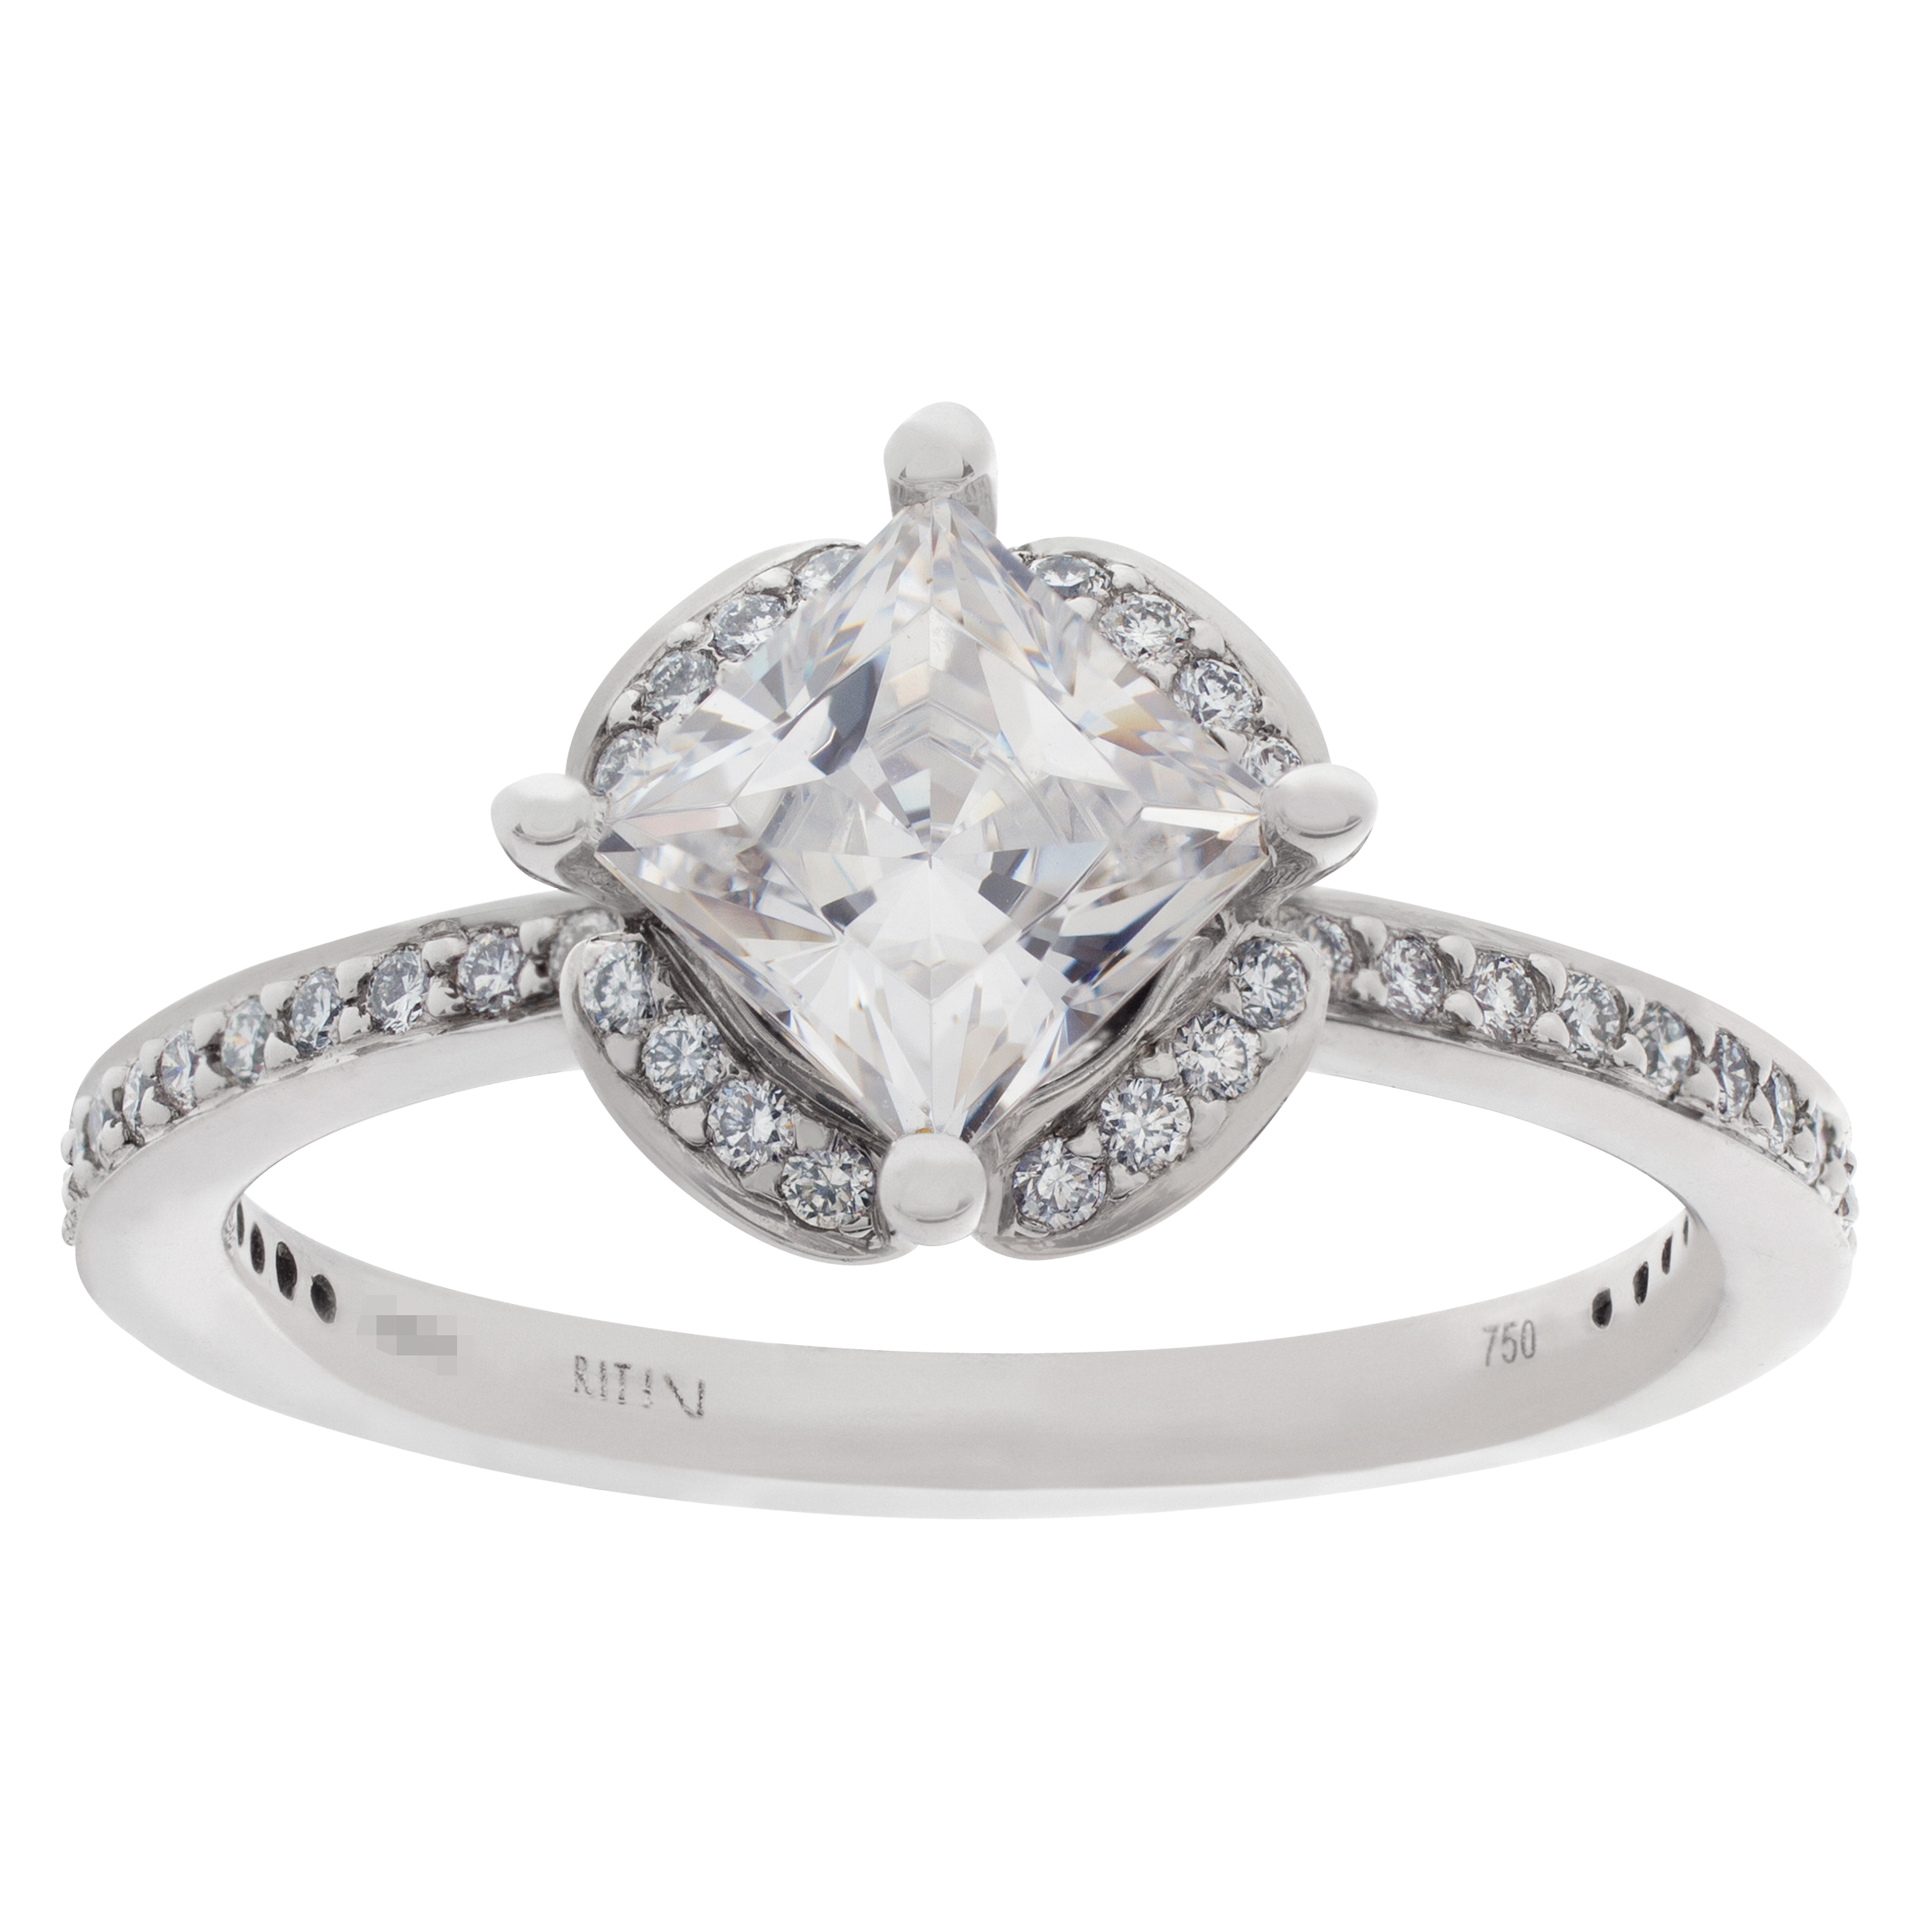 Designer "Ritani" diamonds (0.35 carat) setting in 18k white gold, specially made for a 1.00 carat princess cut diamond